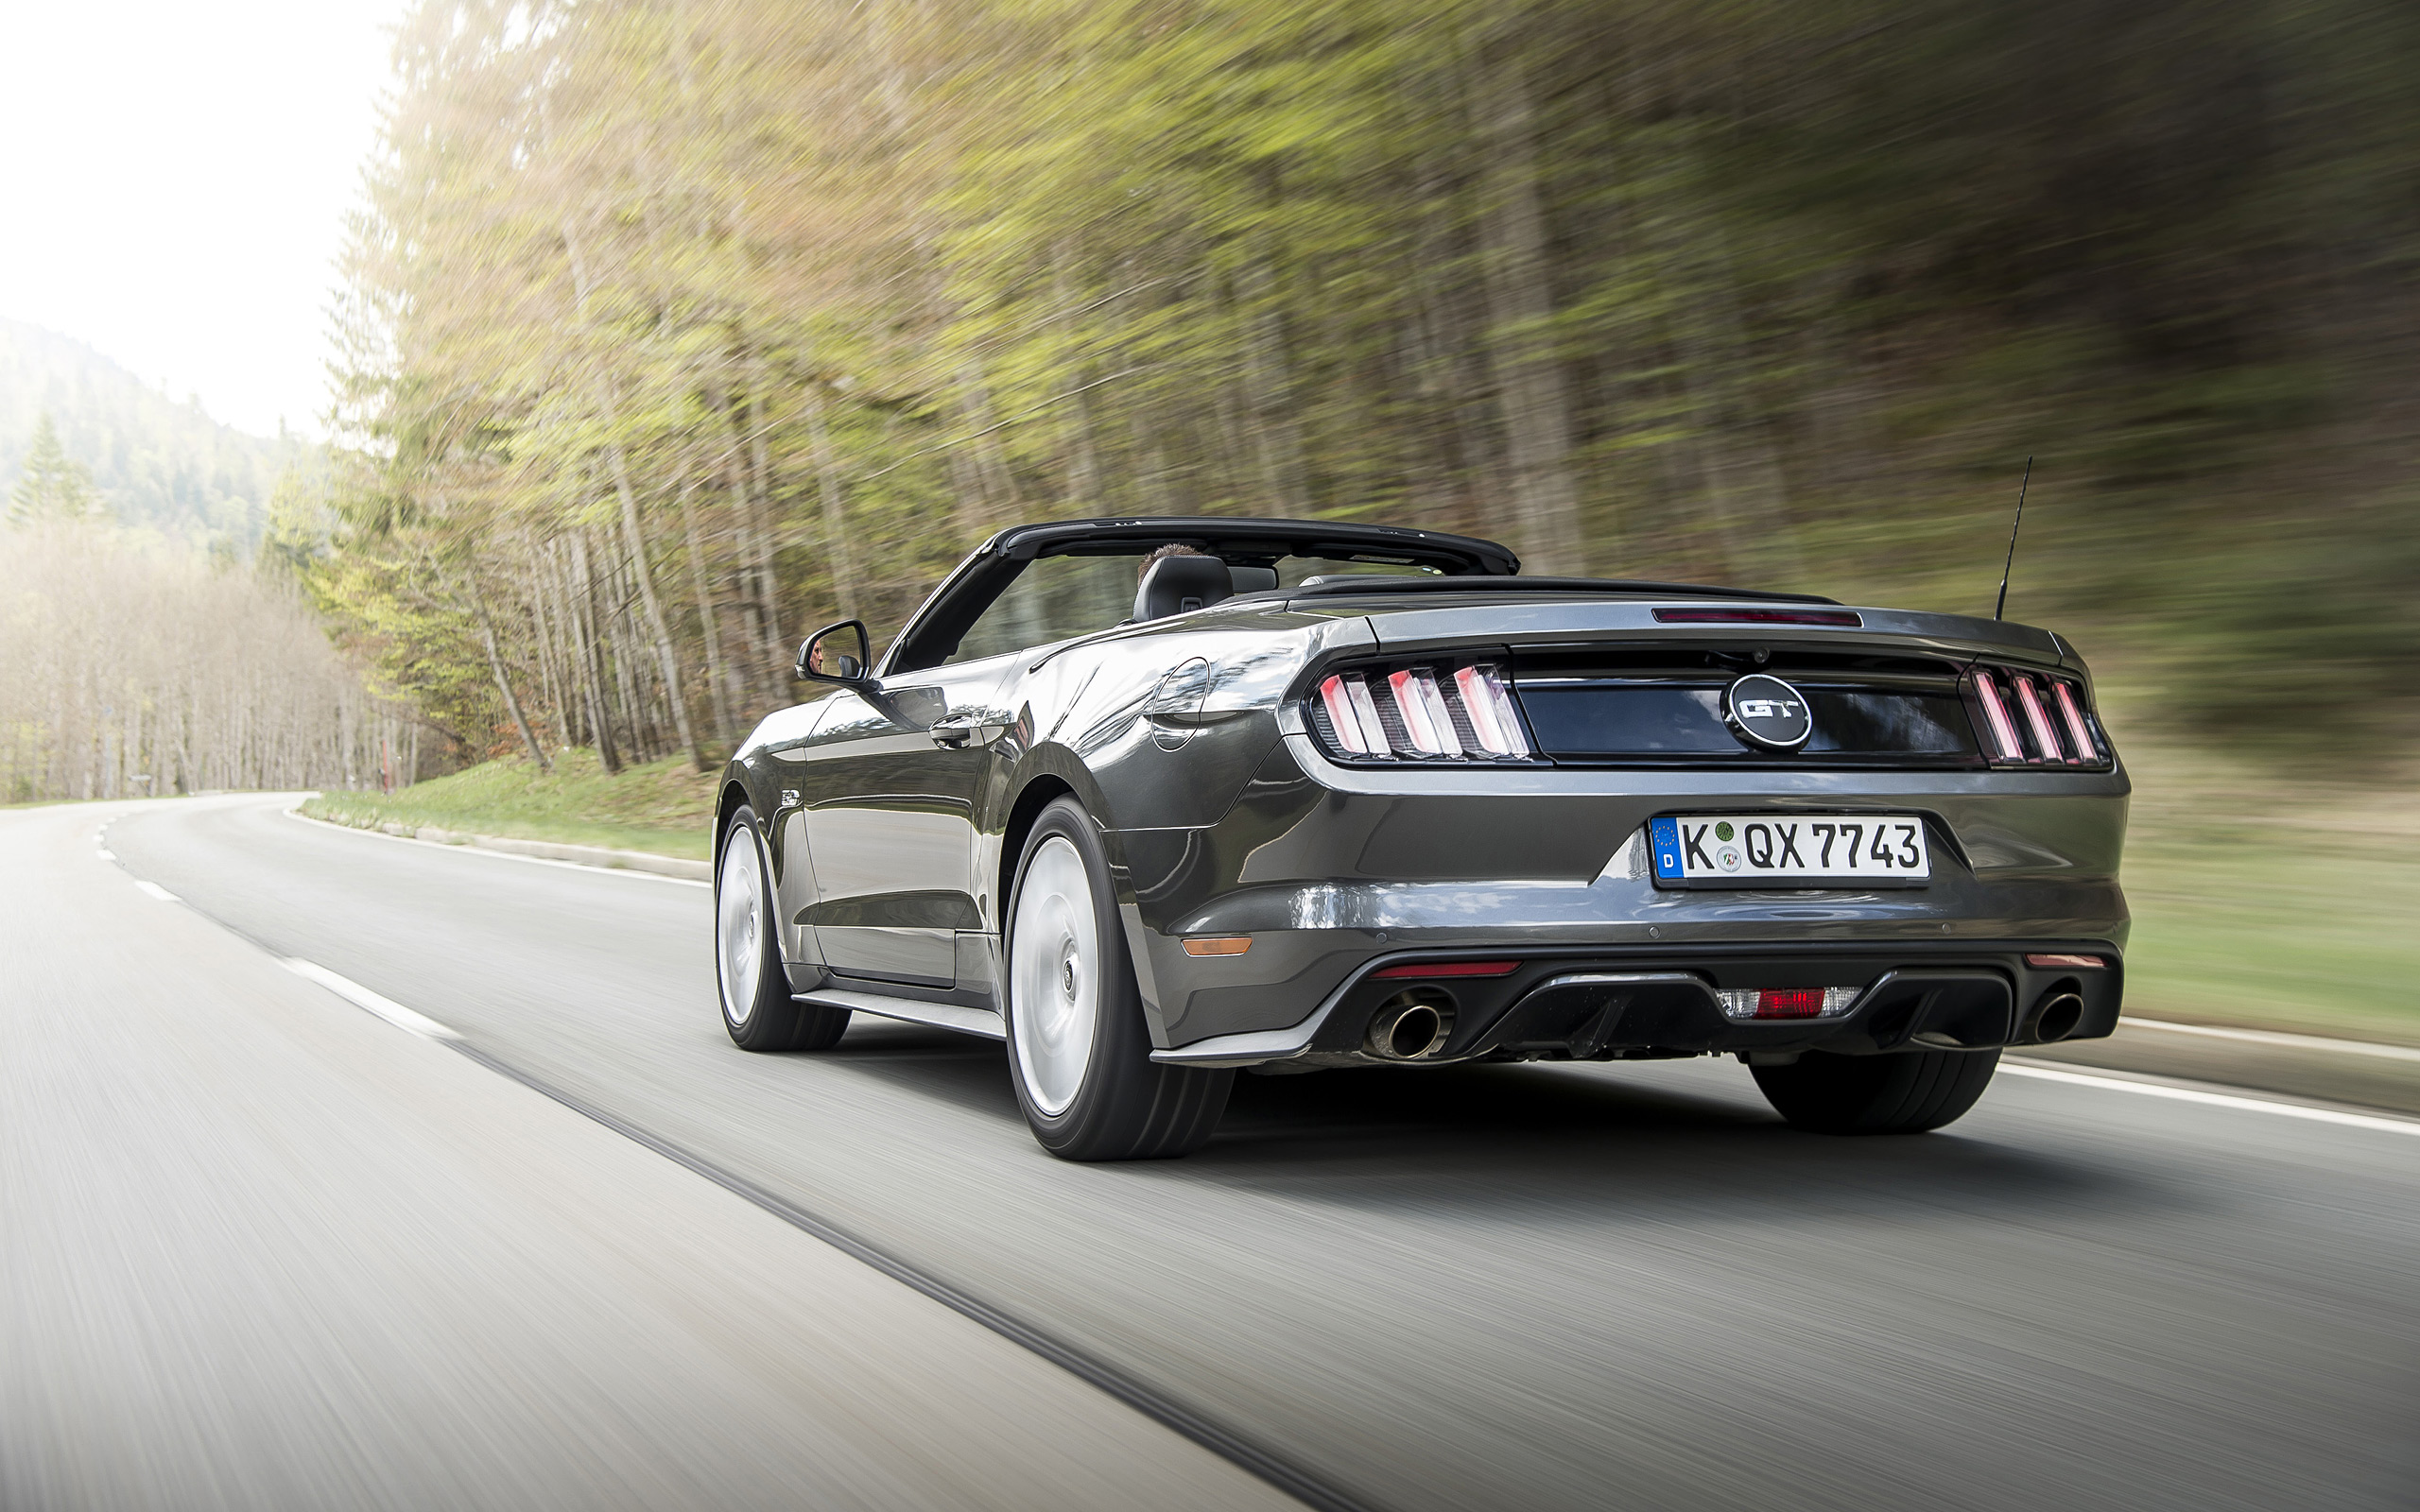  2015 Ford Mustang GT Convertible Wallpaper.